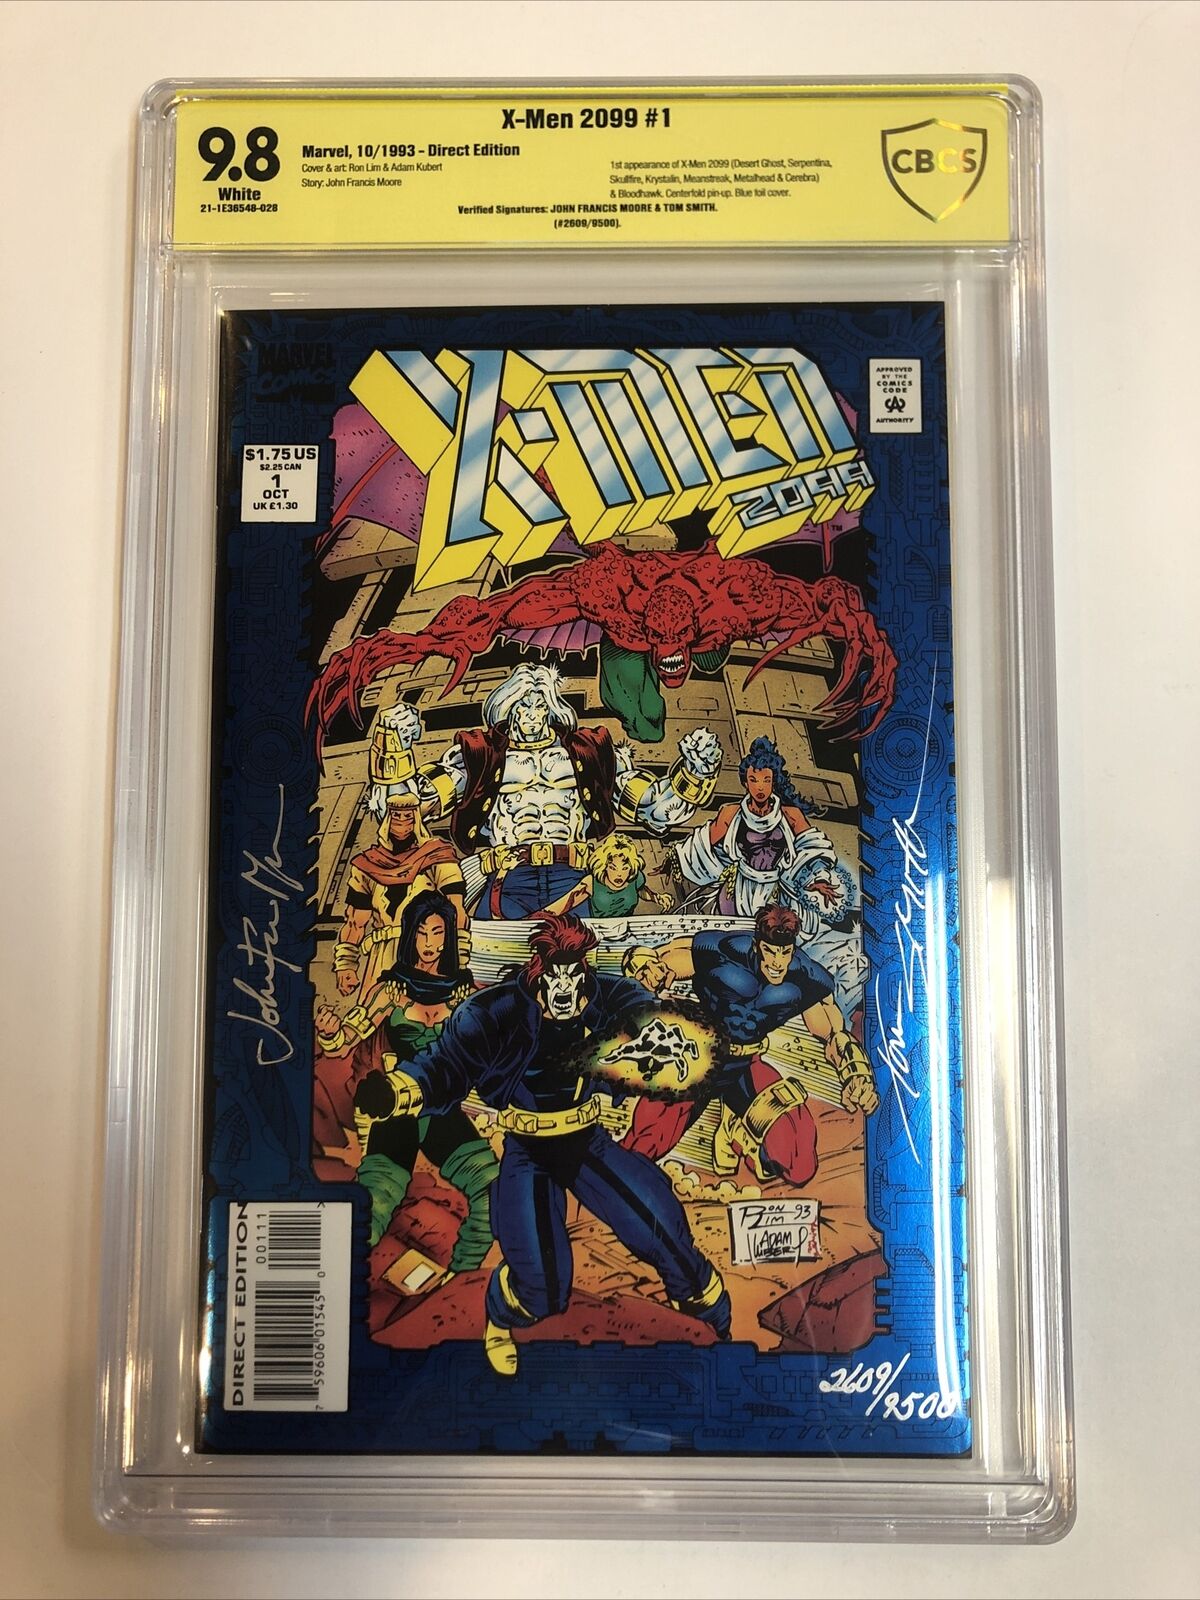 X-Men 2099 (1993) # 1 CBCS 9.8 WP Verified Signature John Francis Moore & Smith